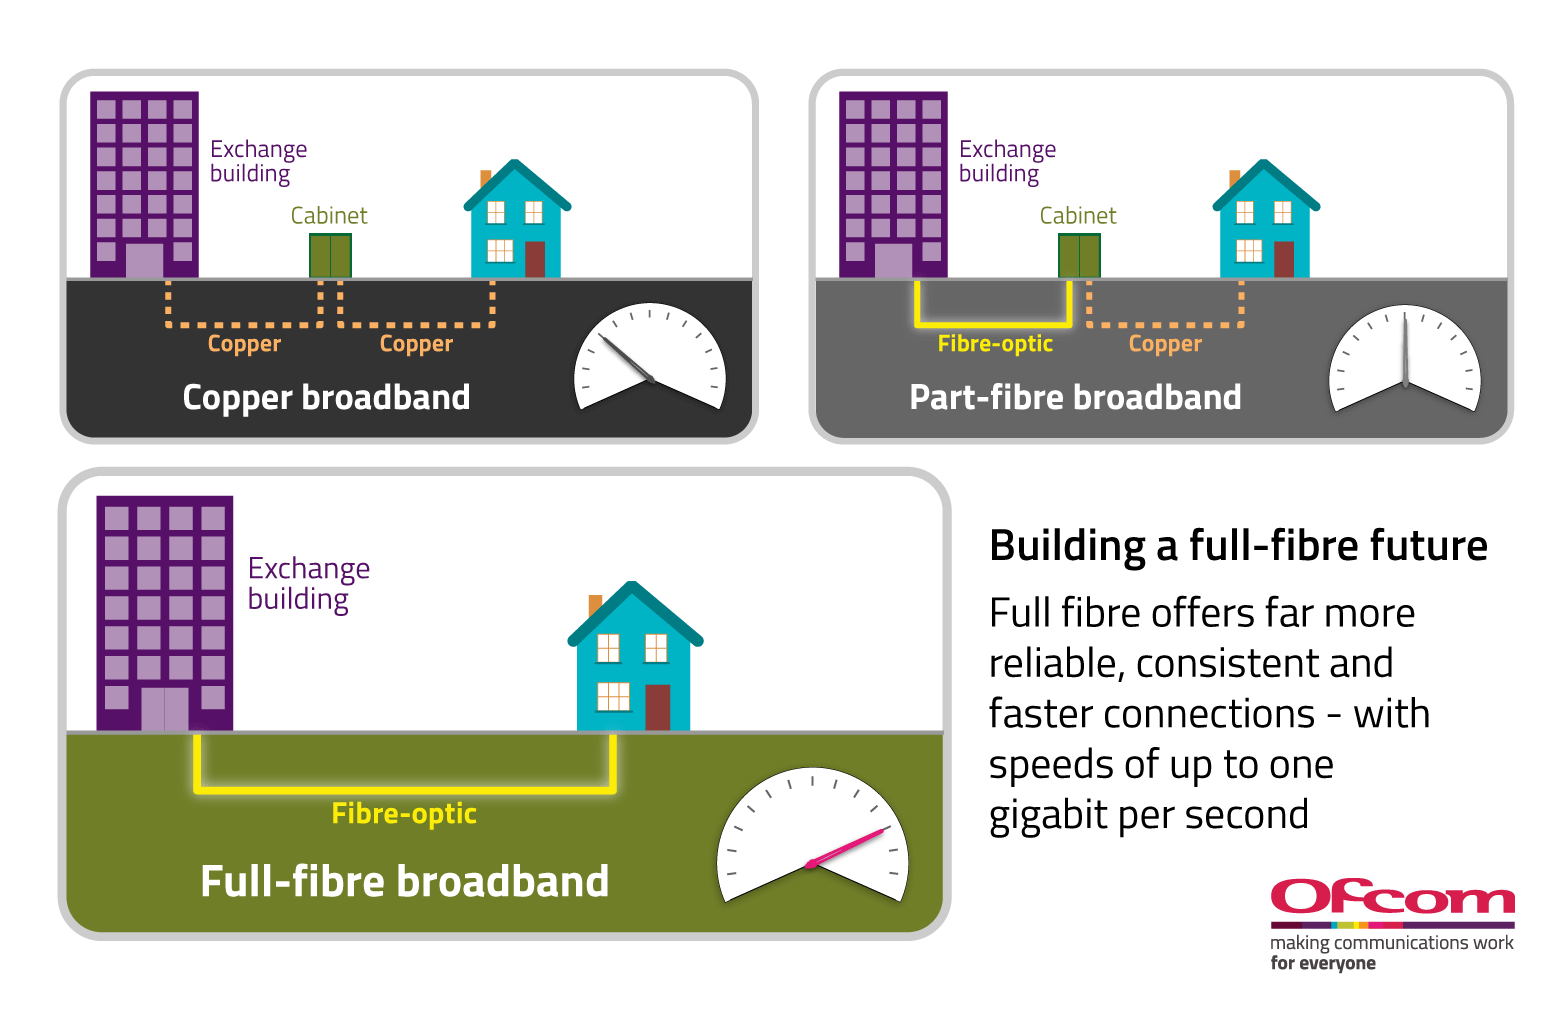 What is full-fibre broadband?